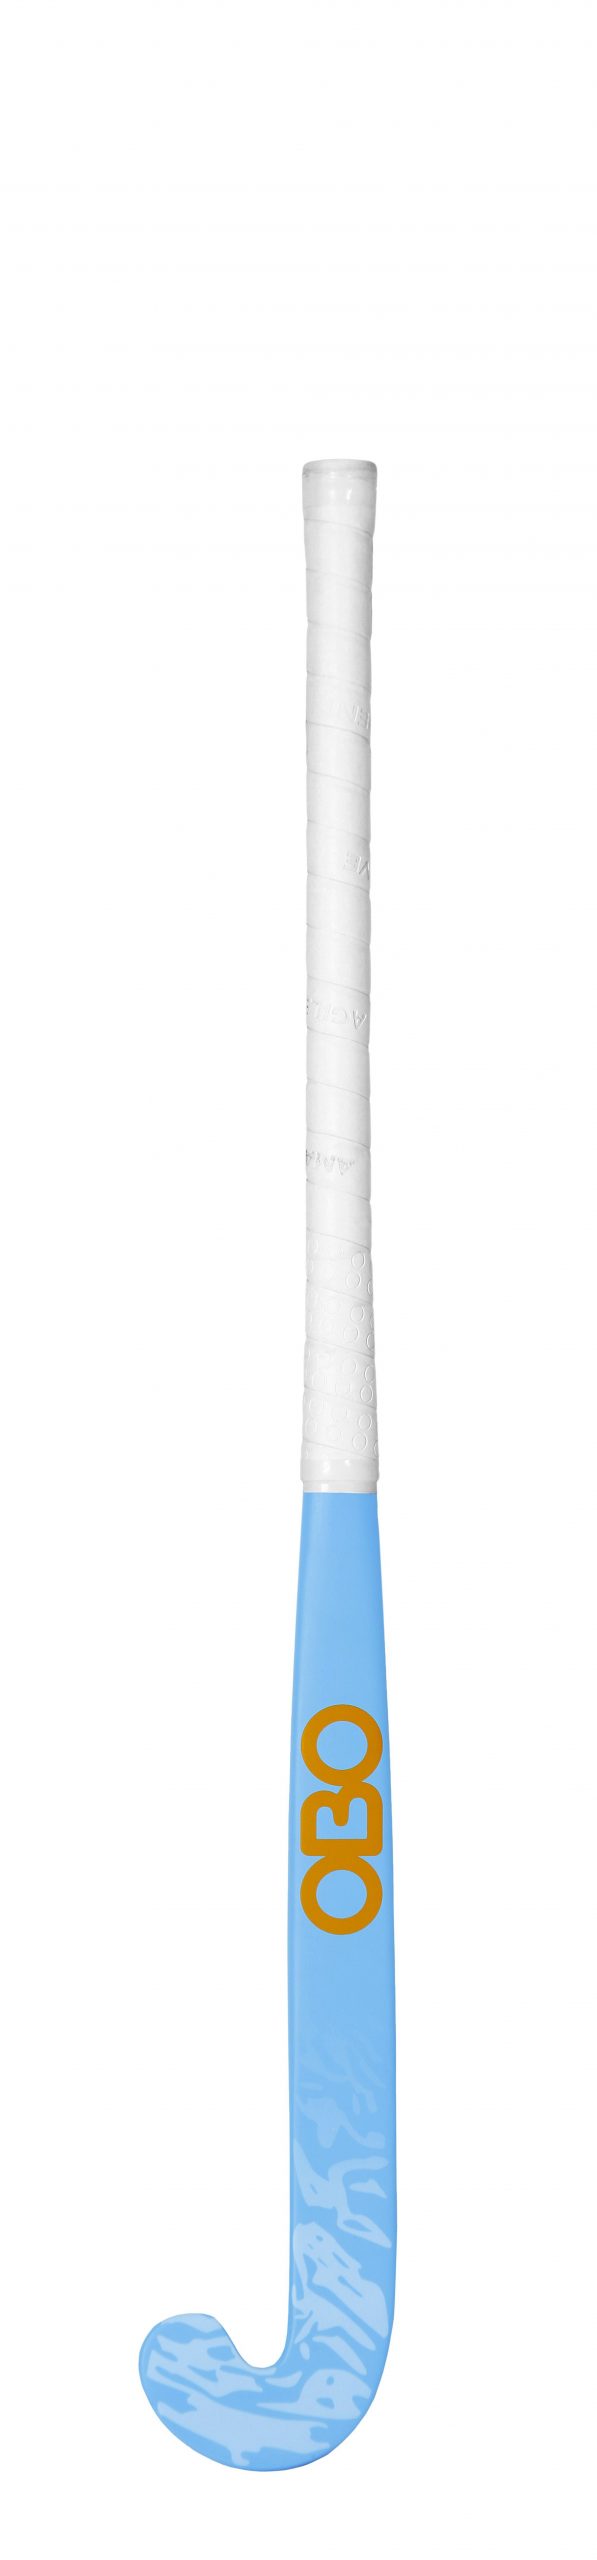 obo-yahoo-stick-straight-as-torwartschlaeger-blue-total-left